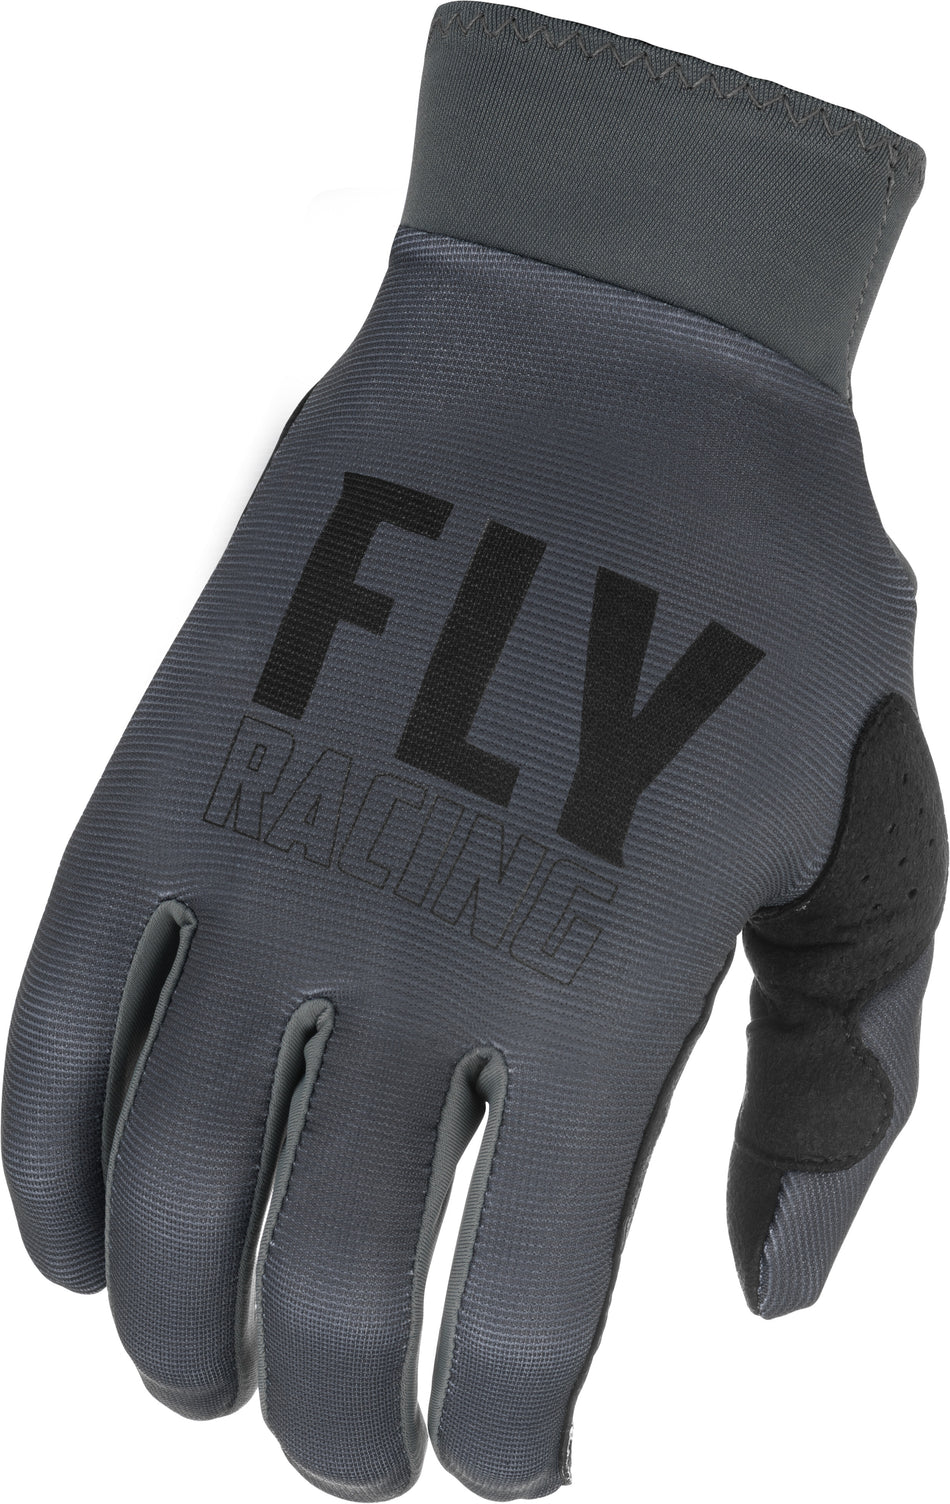 FLY RACING Pro Lite Gloves Grey/Black Xl 374-856X